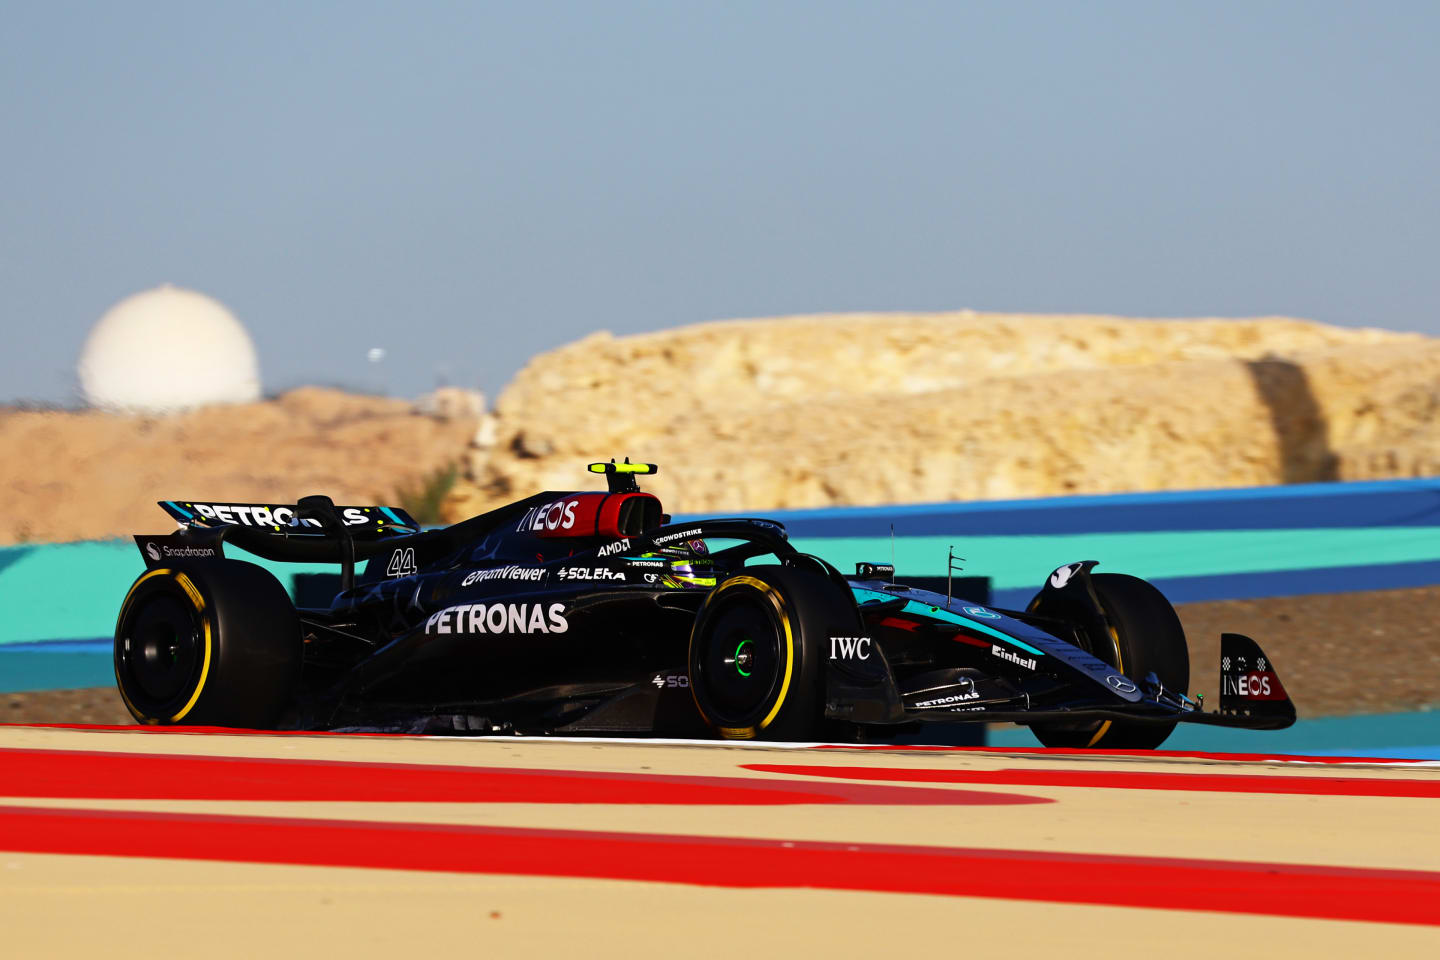 BAHRAIN, BAHRAIN - FEBRUARY 22: Lewis Hamilton of Great Britain driving the (44) Mercedes AMG